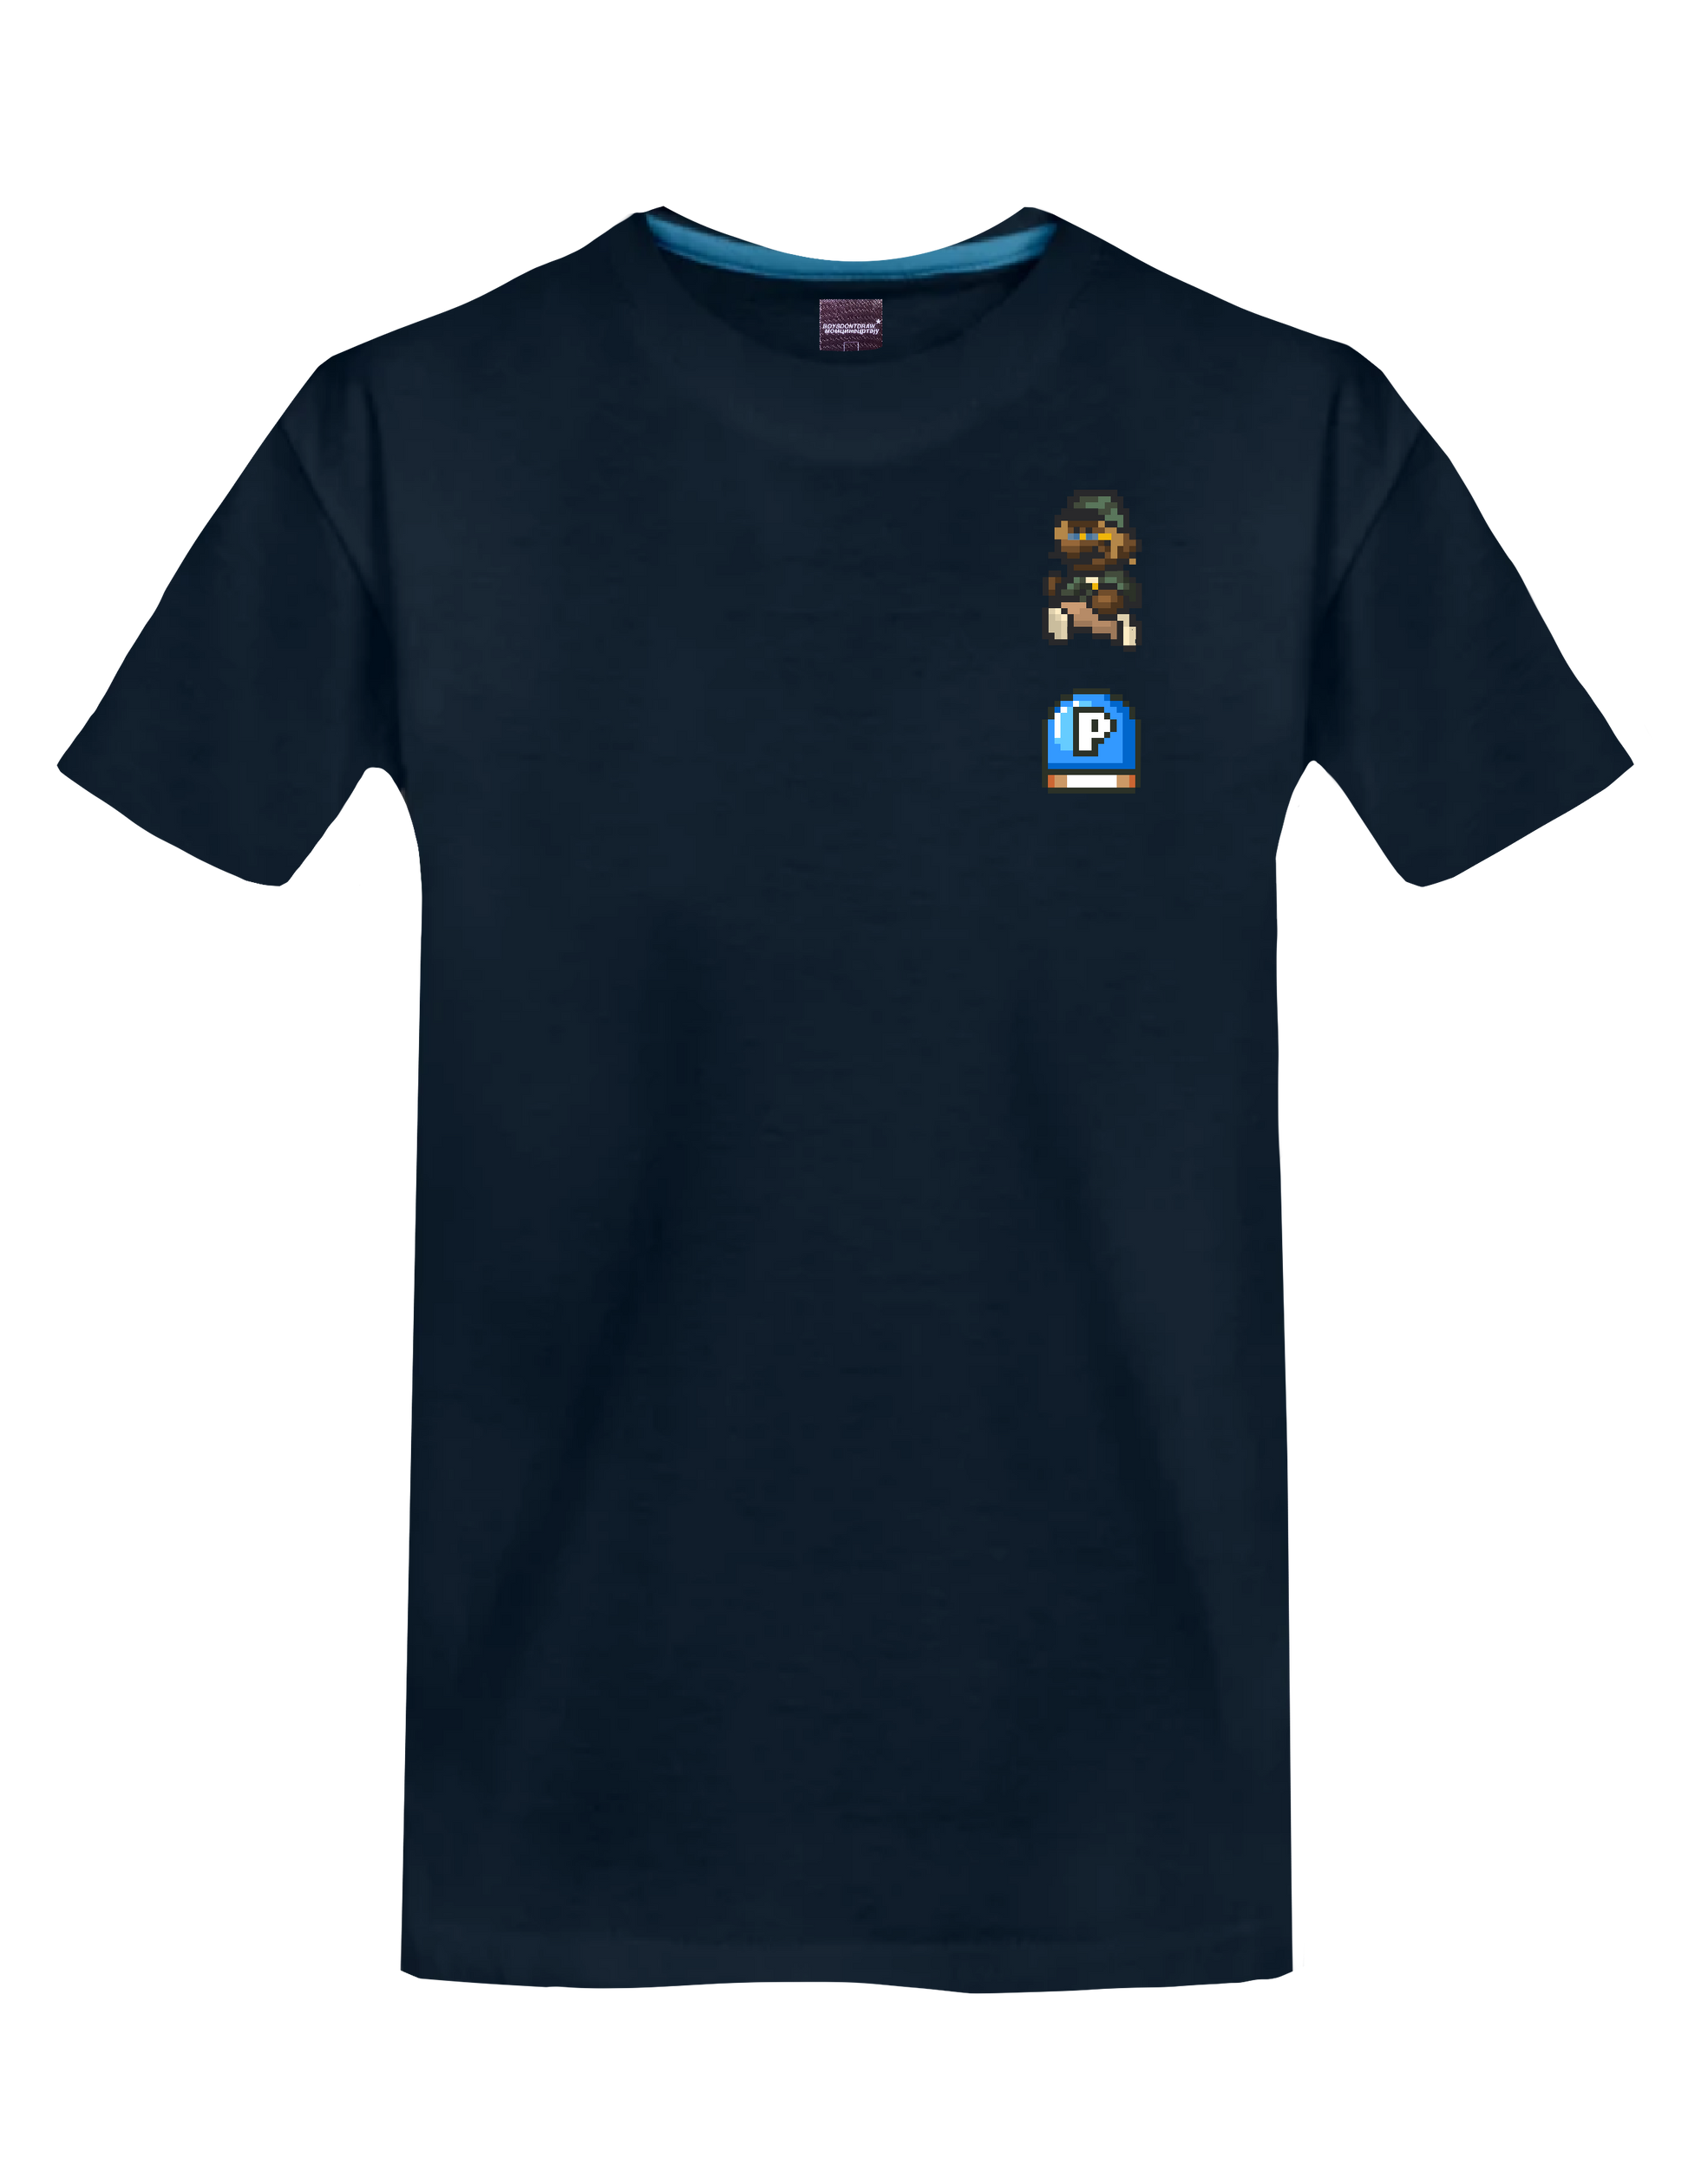 GUNNA - PUSHIN P (Navy Blue) - T-Shirt by BOYSDONTDRAW